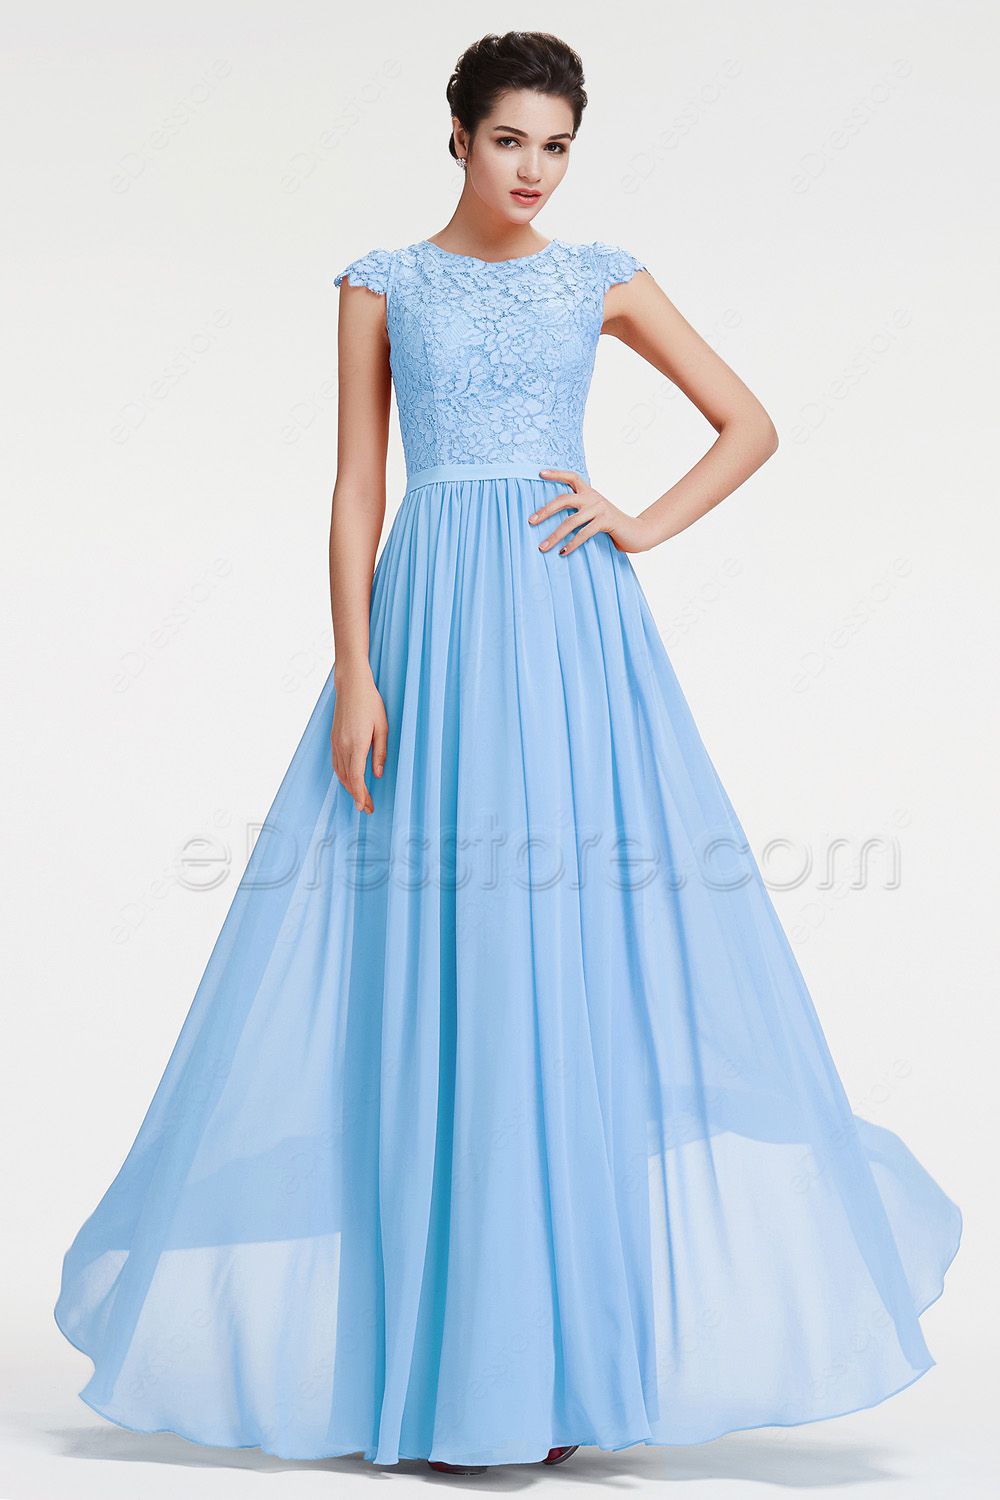 modest prom dresses